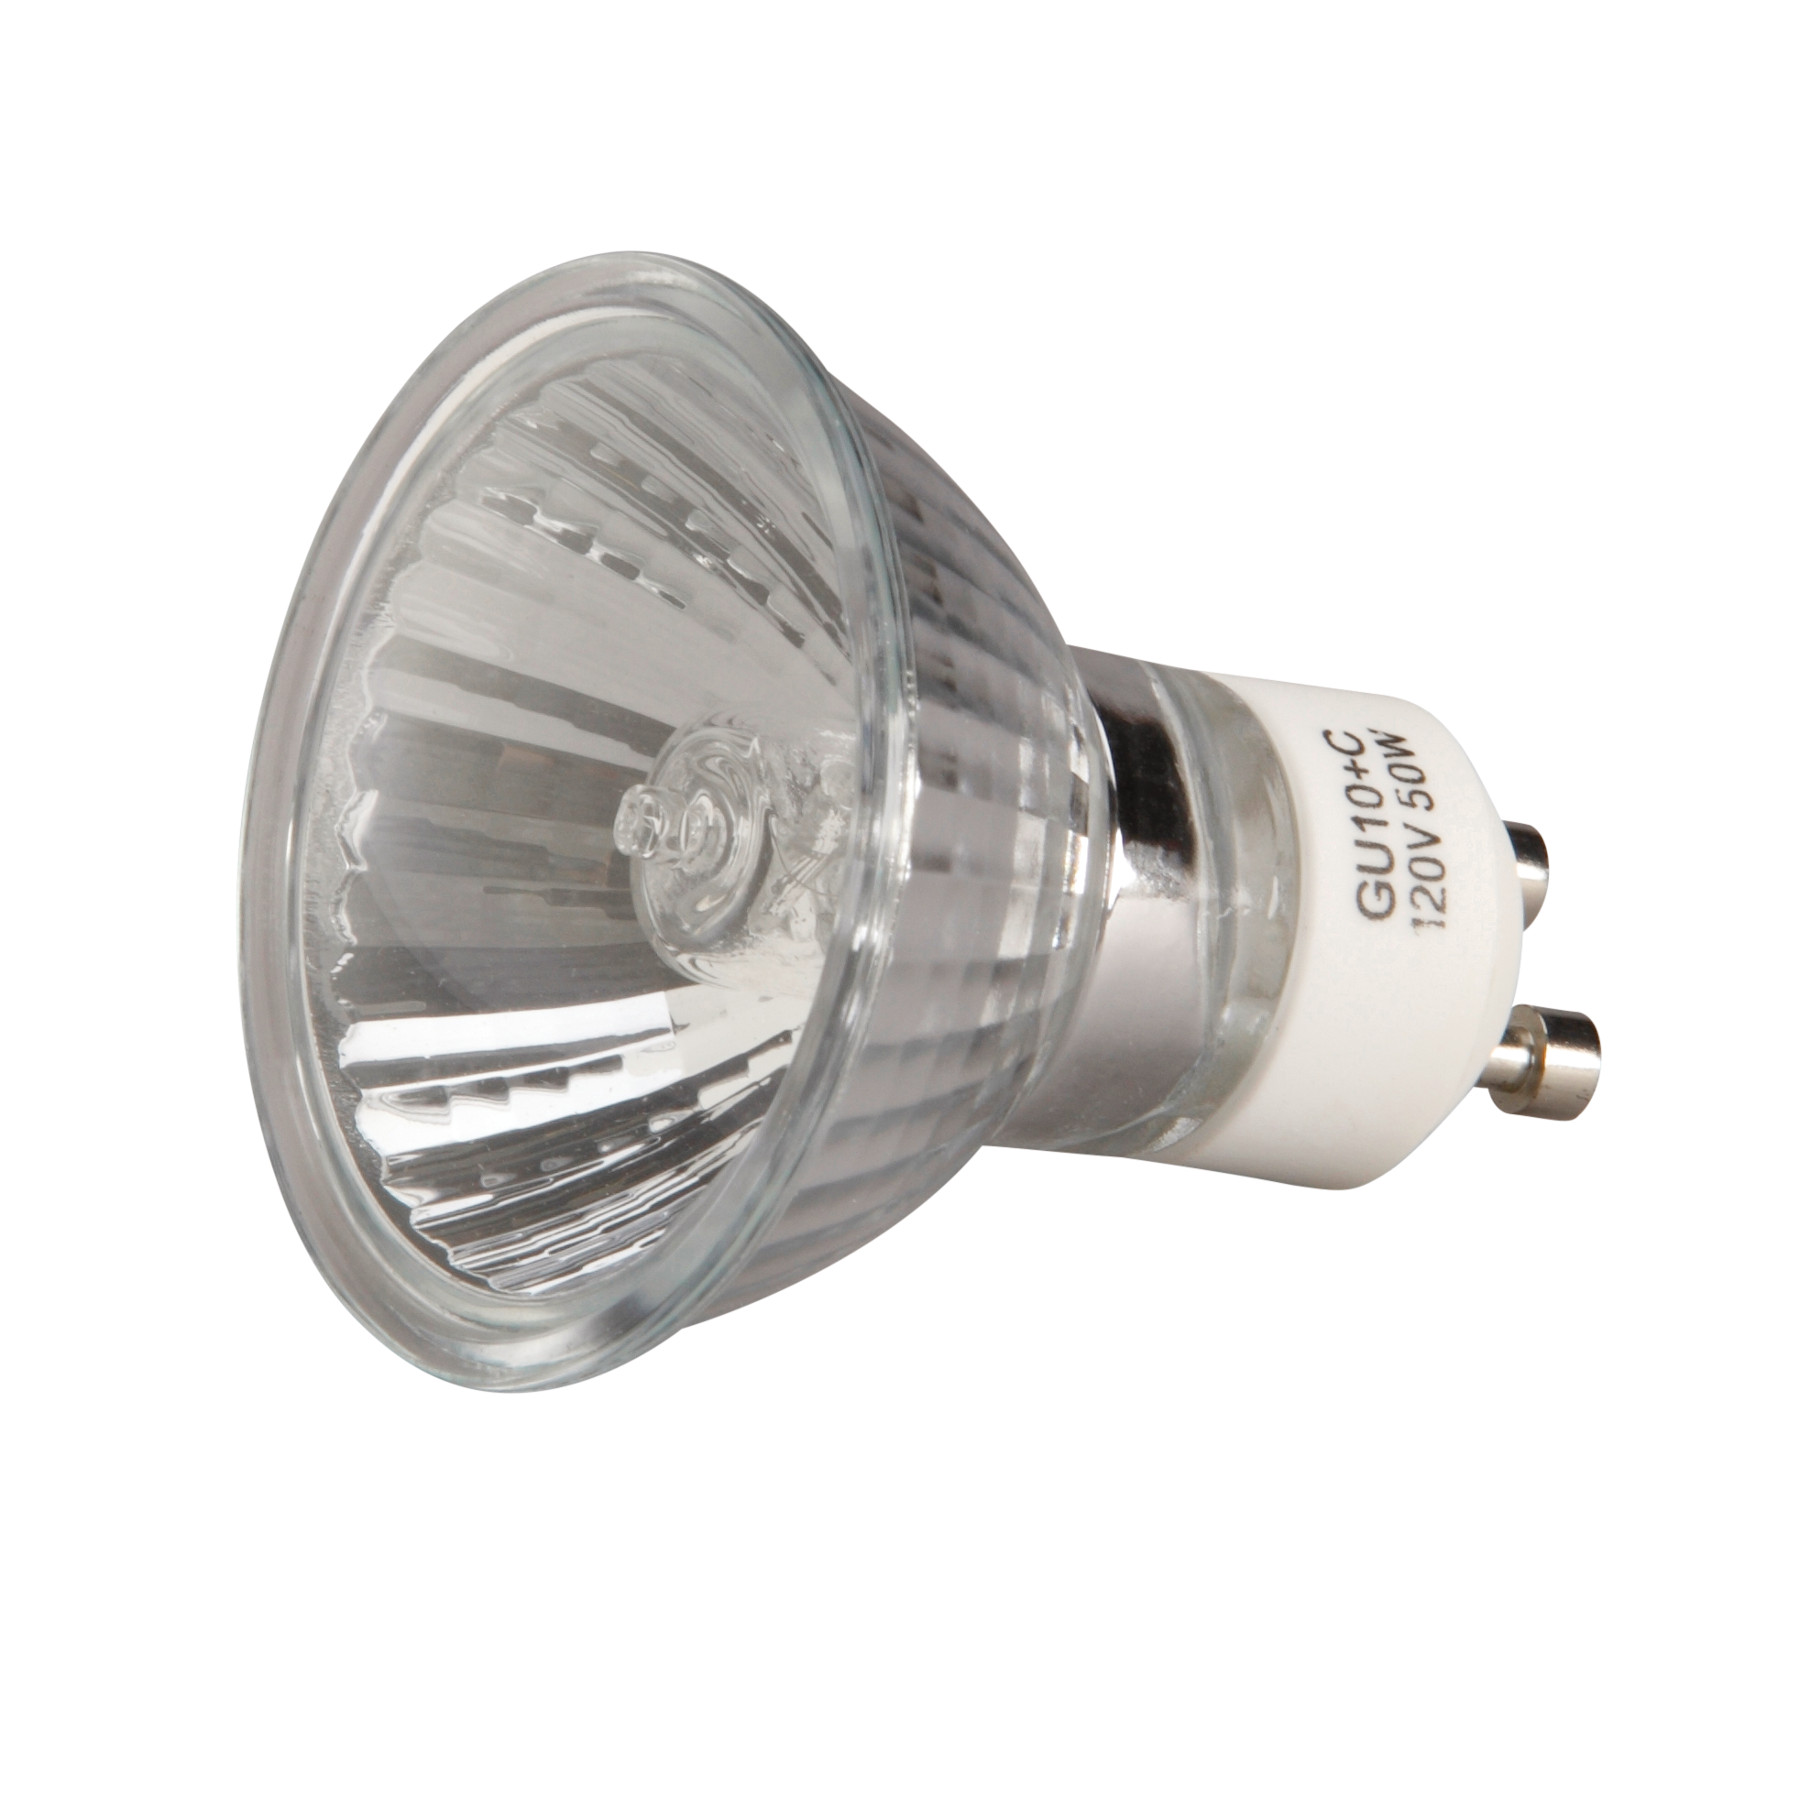 MR16 Reflector Flood Replacement Light Bulbs for Kitchen Hood,Ceiling Fan,Table Lamps GU10 Base 110V/120V 50 Watt Halogen Bulbs 